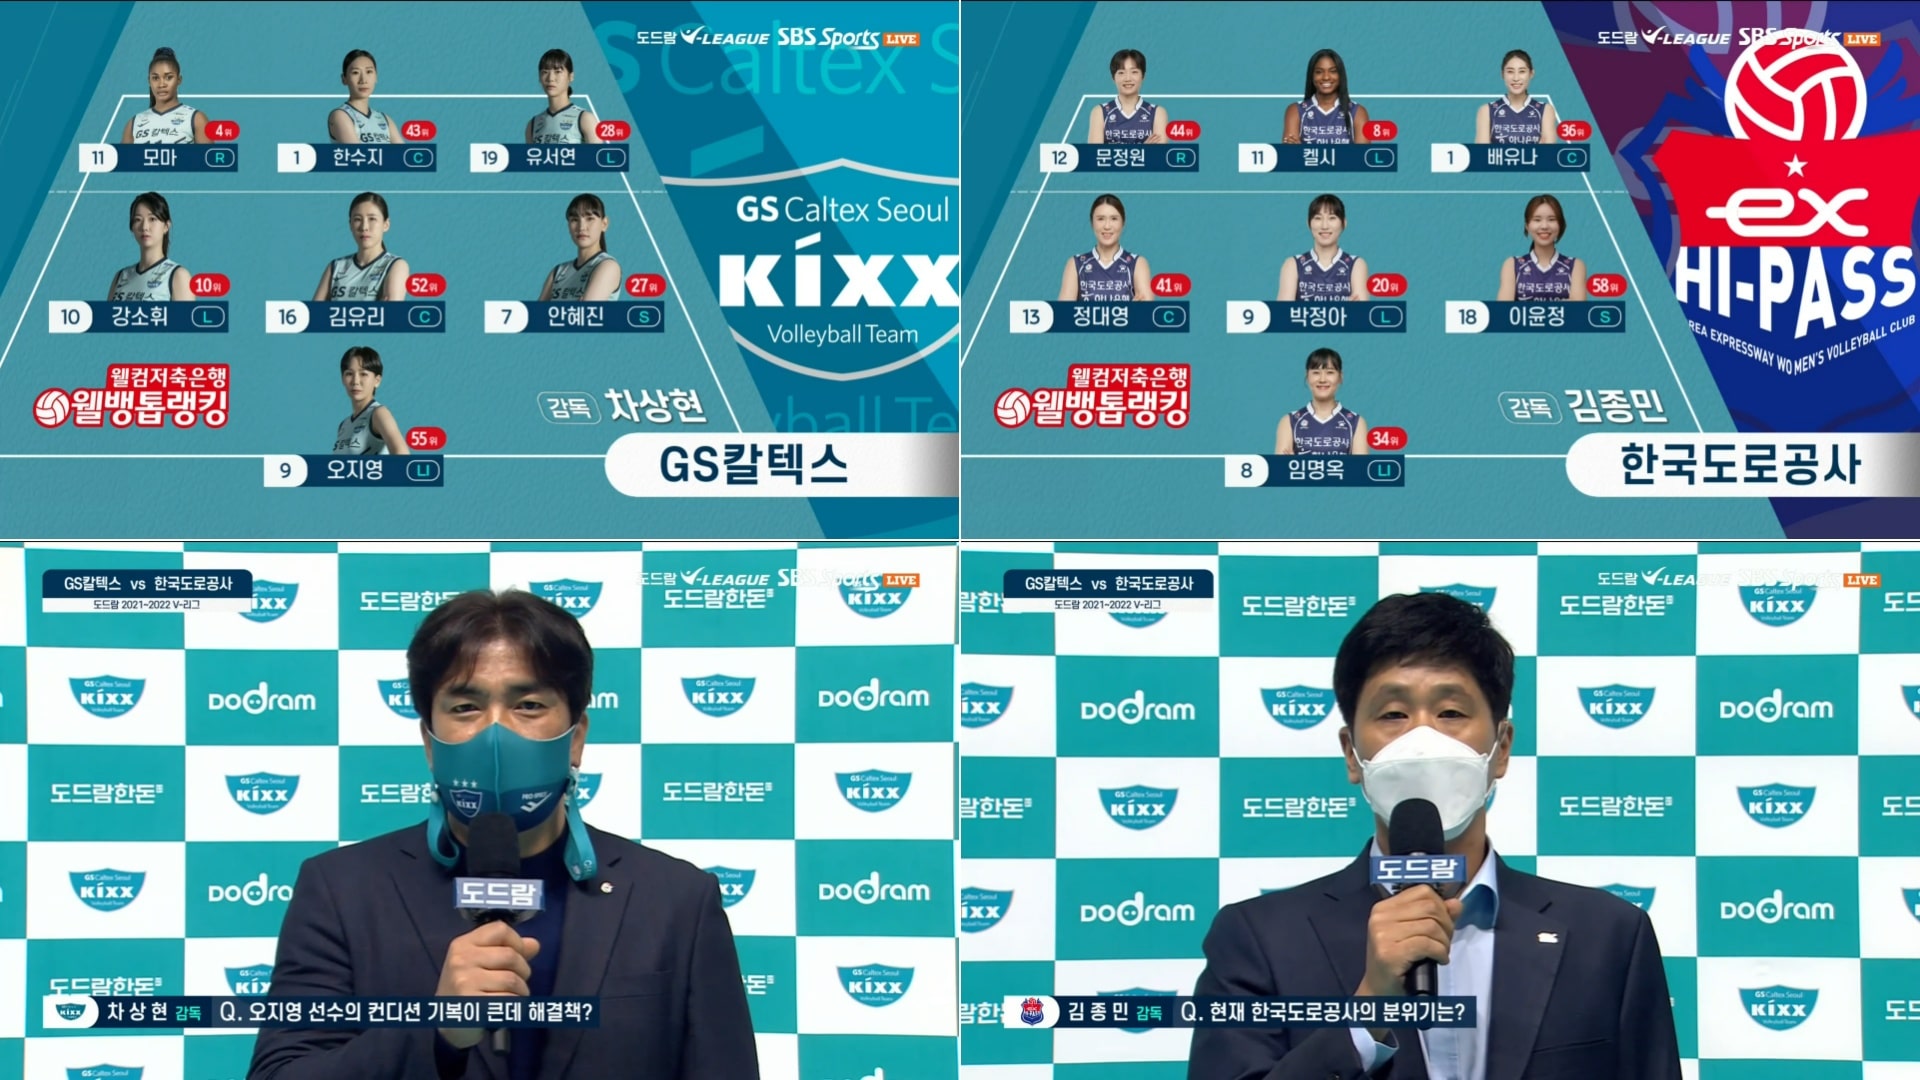 GS칼텍스 : 한국도로공사 2라운드 선발 라인업 및 사전 인터뷰 장면을 모았습니다. (출처 : SBS 스포츠)